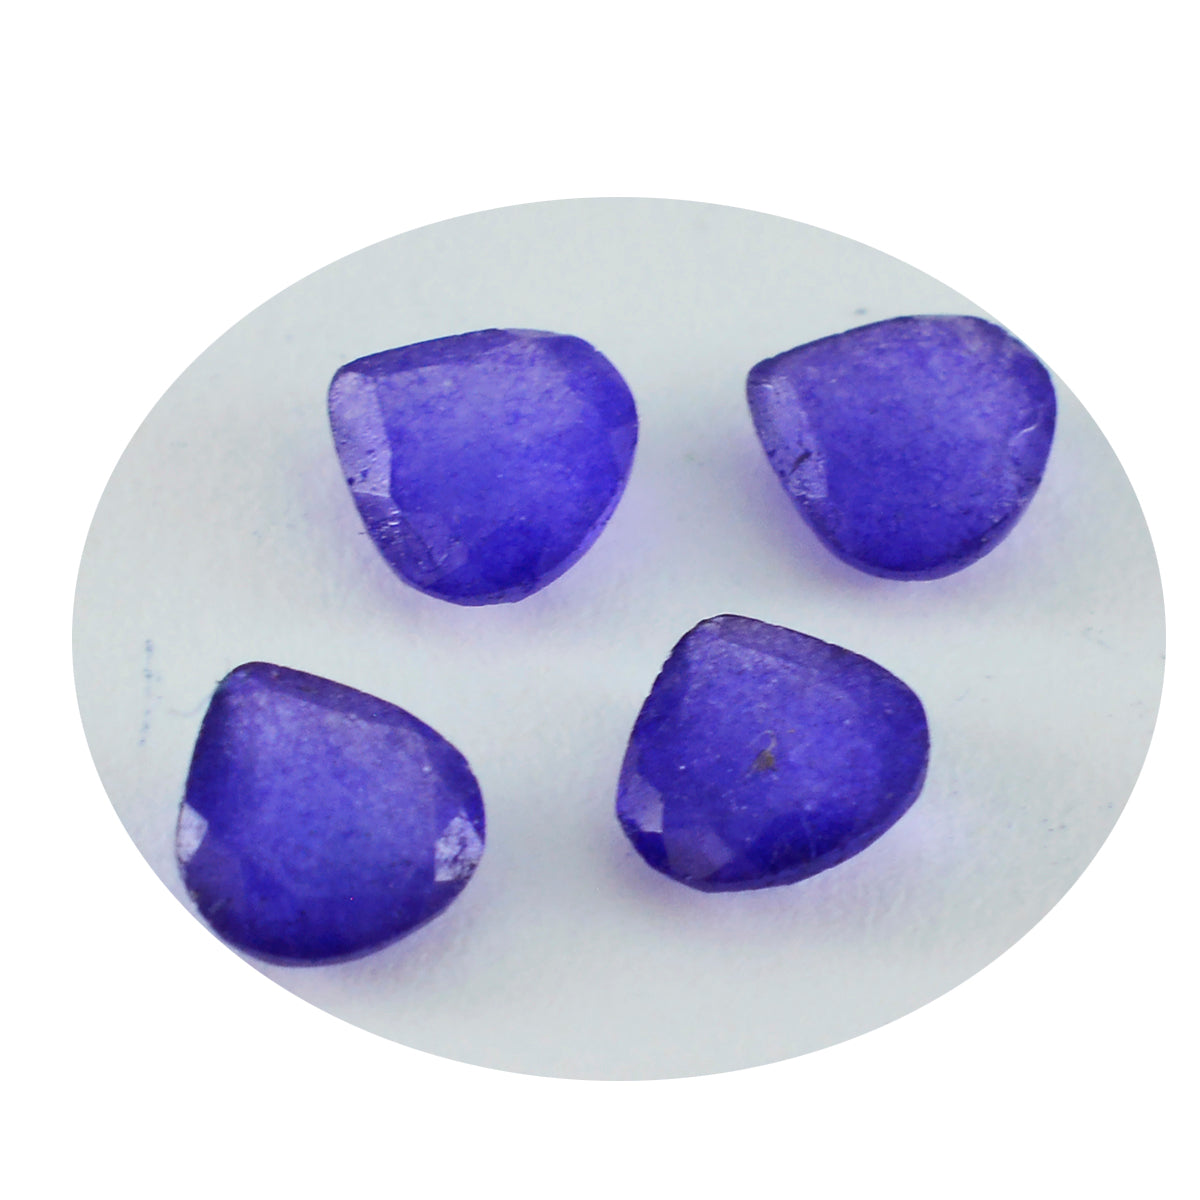 riyogems 1 st äkta blå jaspis facetterad 8x8 mm hjärtform häpnadsväckande kvalitetspärla